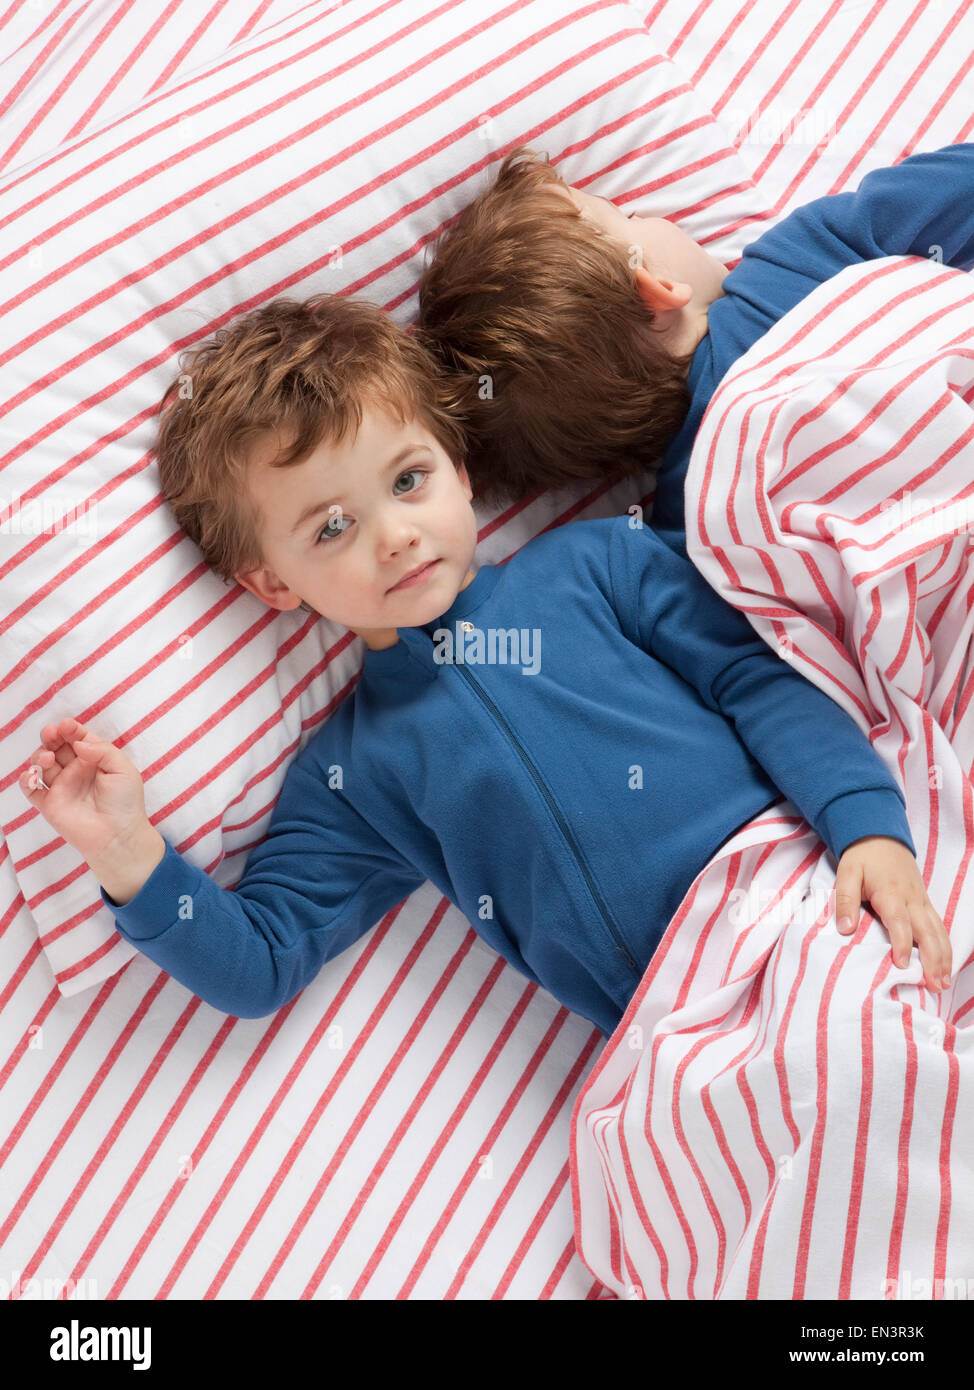 USA, Utah, Orem, Twin Jungen (2-3) tragen Pyjamas auf Bett liegend  Stockfotografie - Alamy